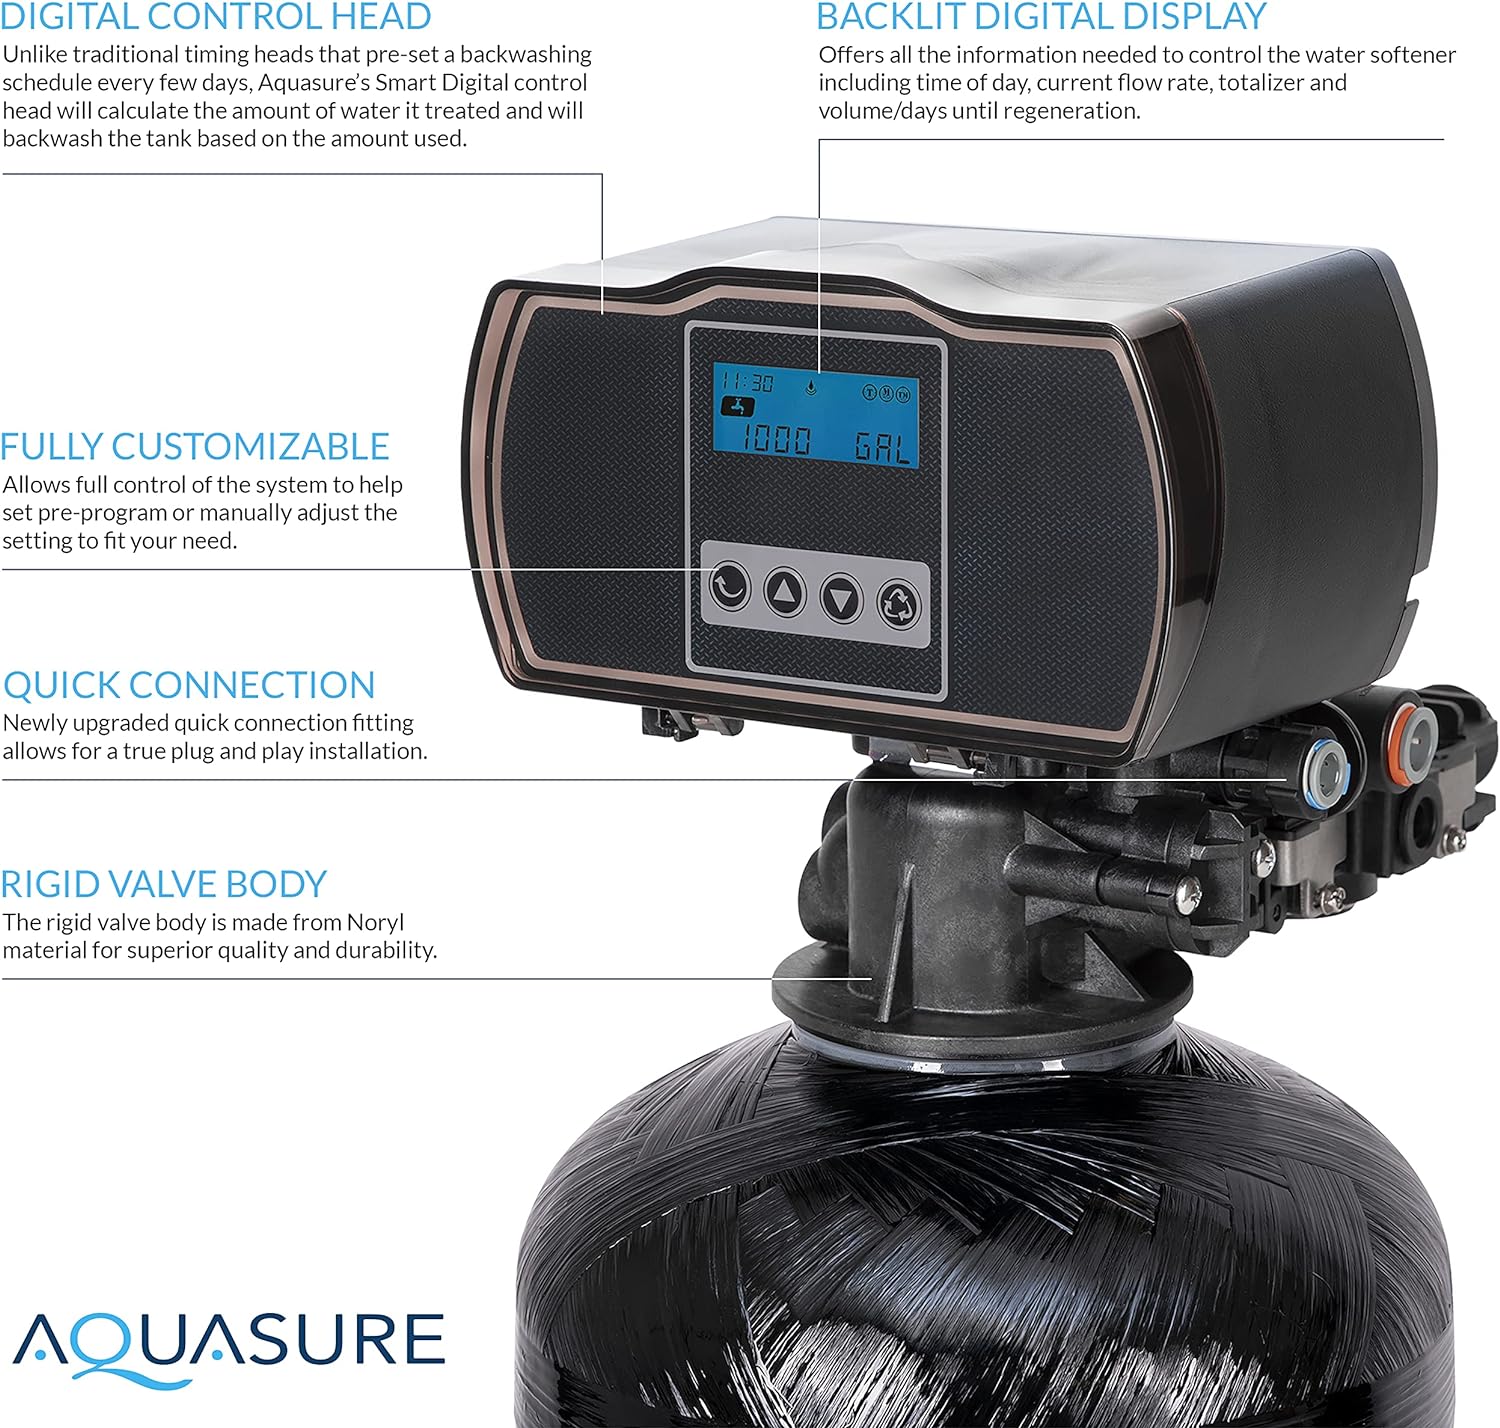 Aquasure Harmony Series Grains Whole House Water Softener 48000 Grains